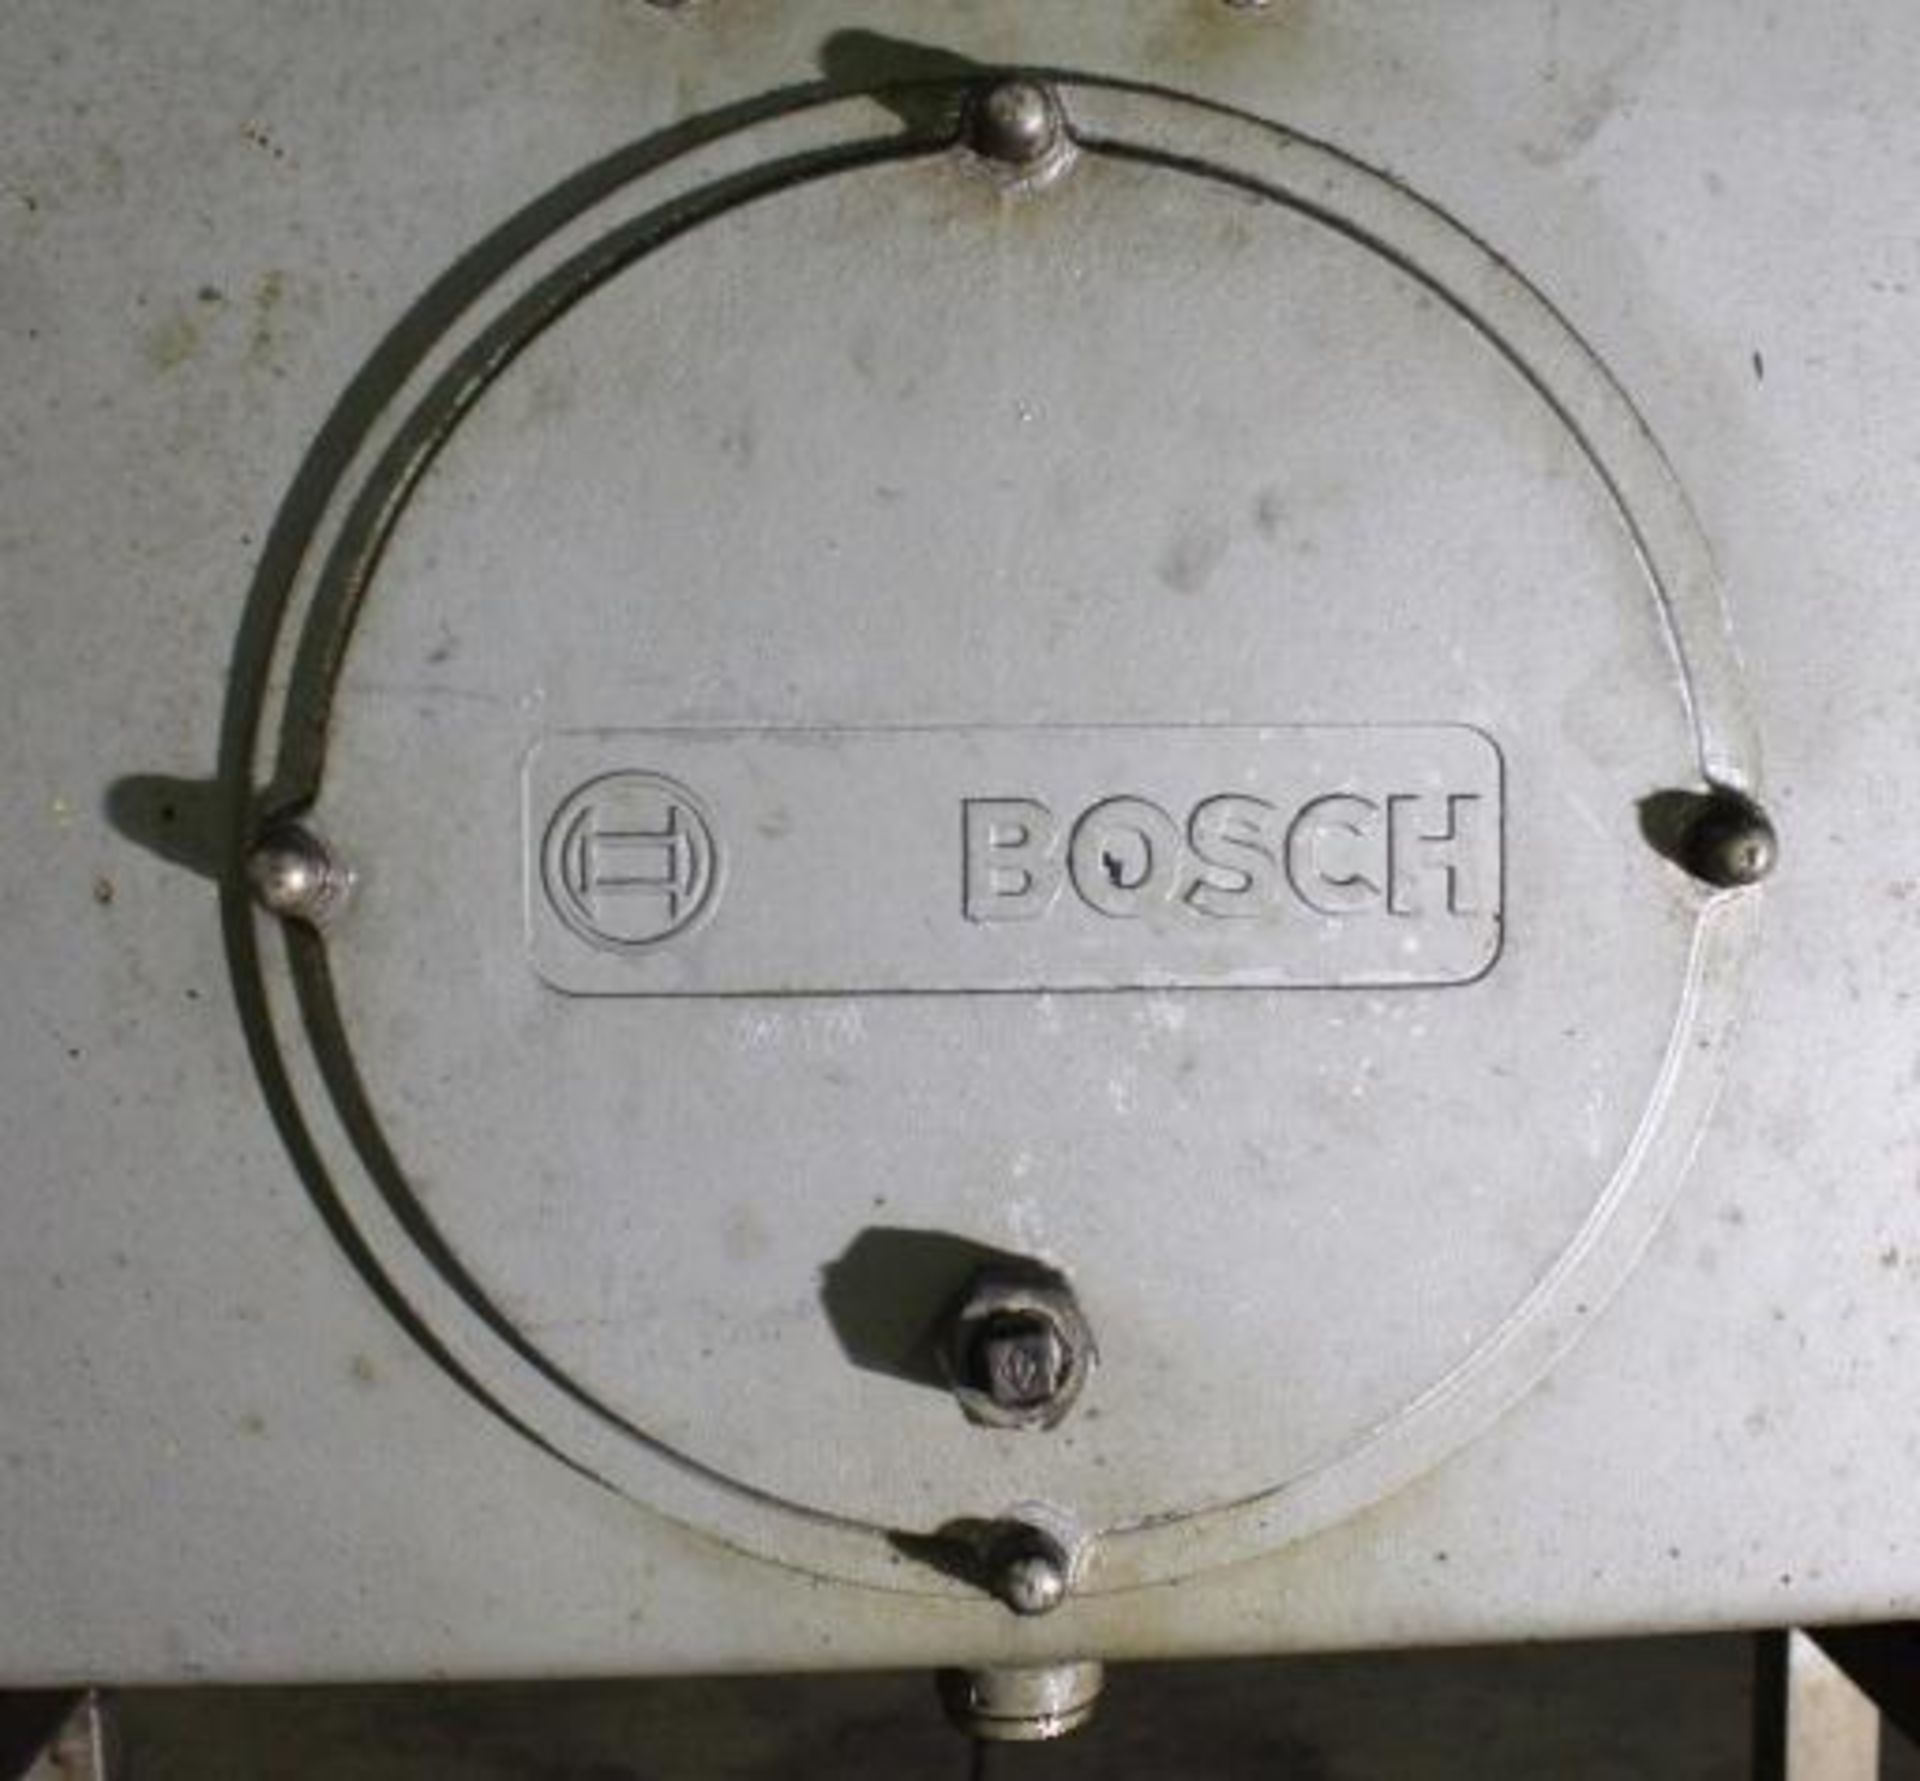 Bosch Twin Pump Hydraulic Power Unit 20 hp/15 KW 60 Hz 460 V. Secondary Motor 1 hp. 208 230/460 V. - Image 3 of 6